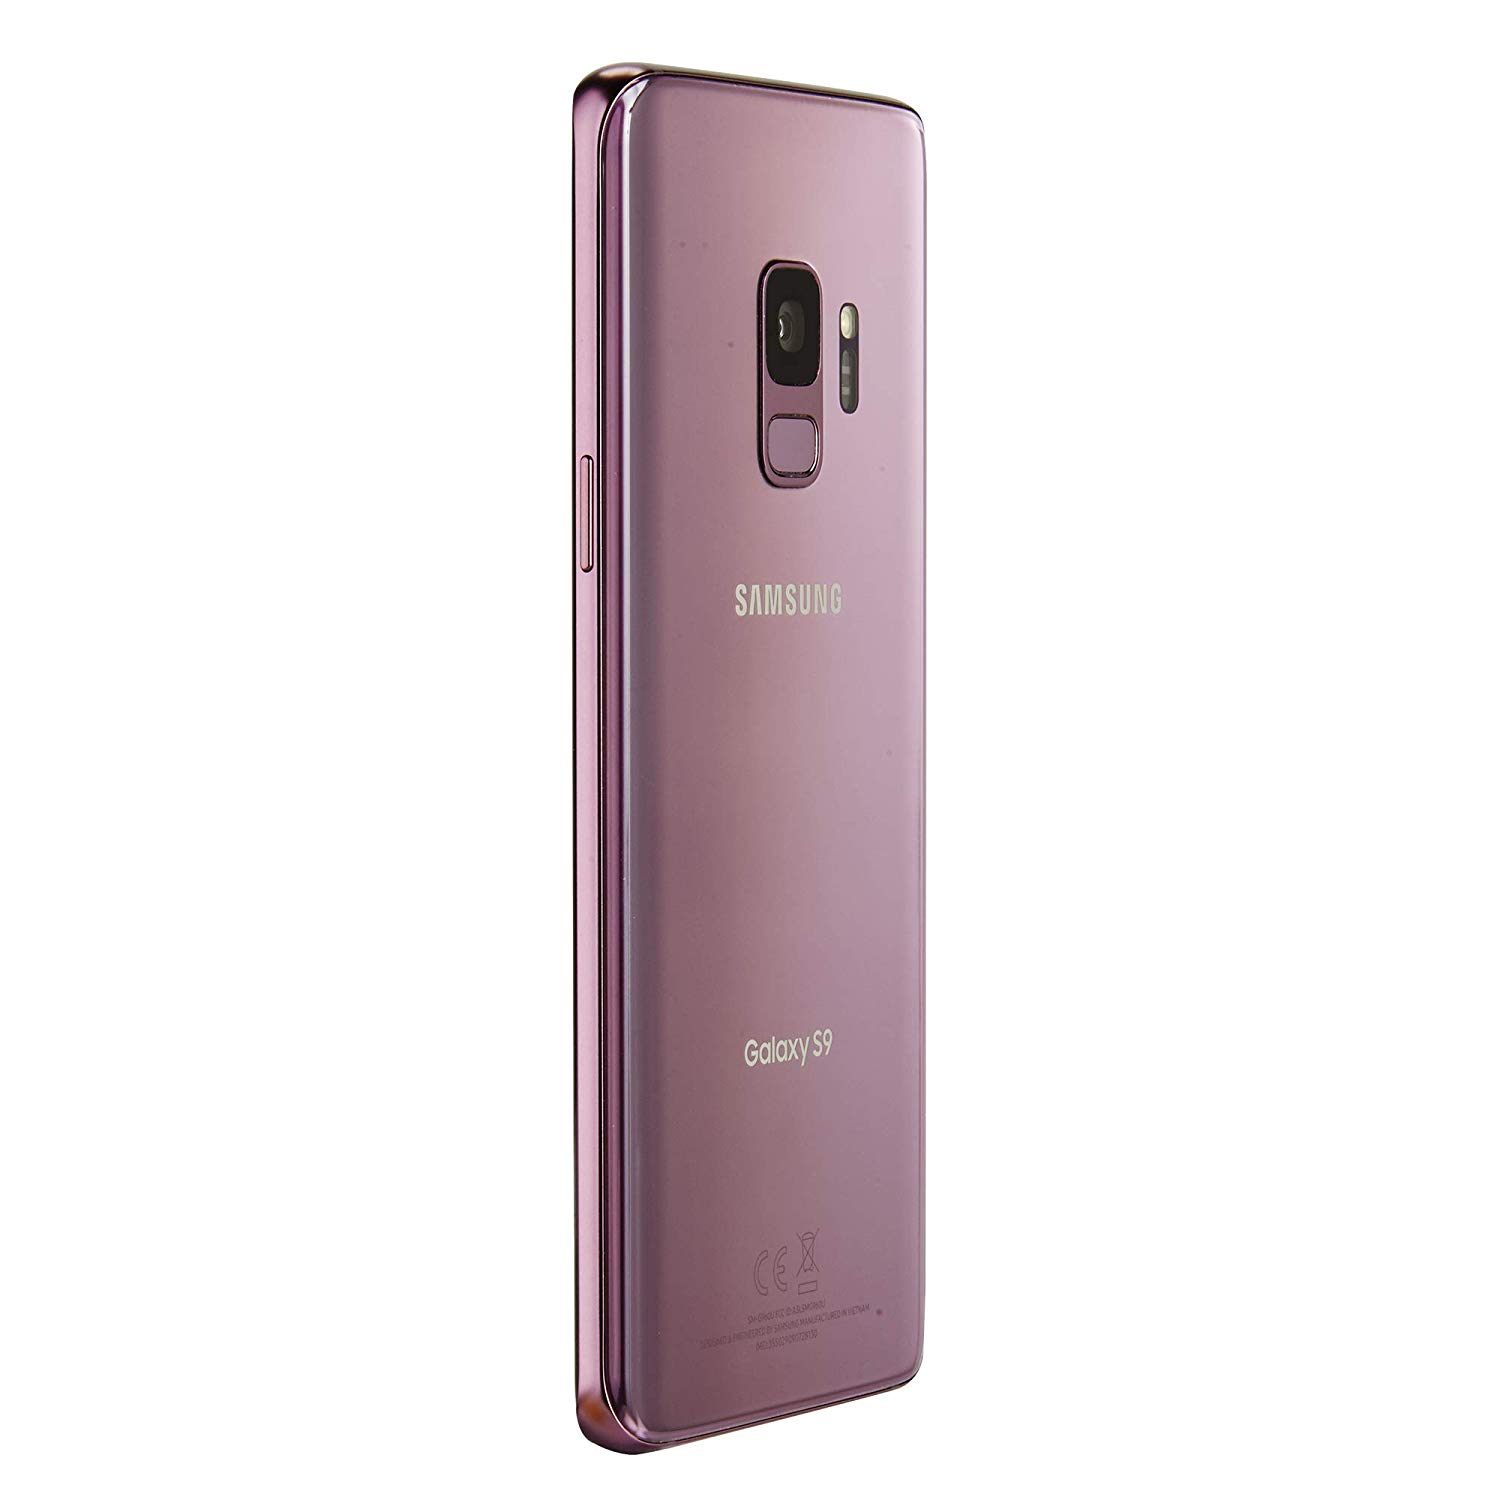 BuySPRY: Samsung Galaxy S9 G960U 64GB Lilac Purple GSM Unlocked 5.8